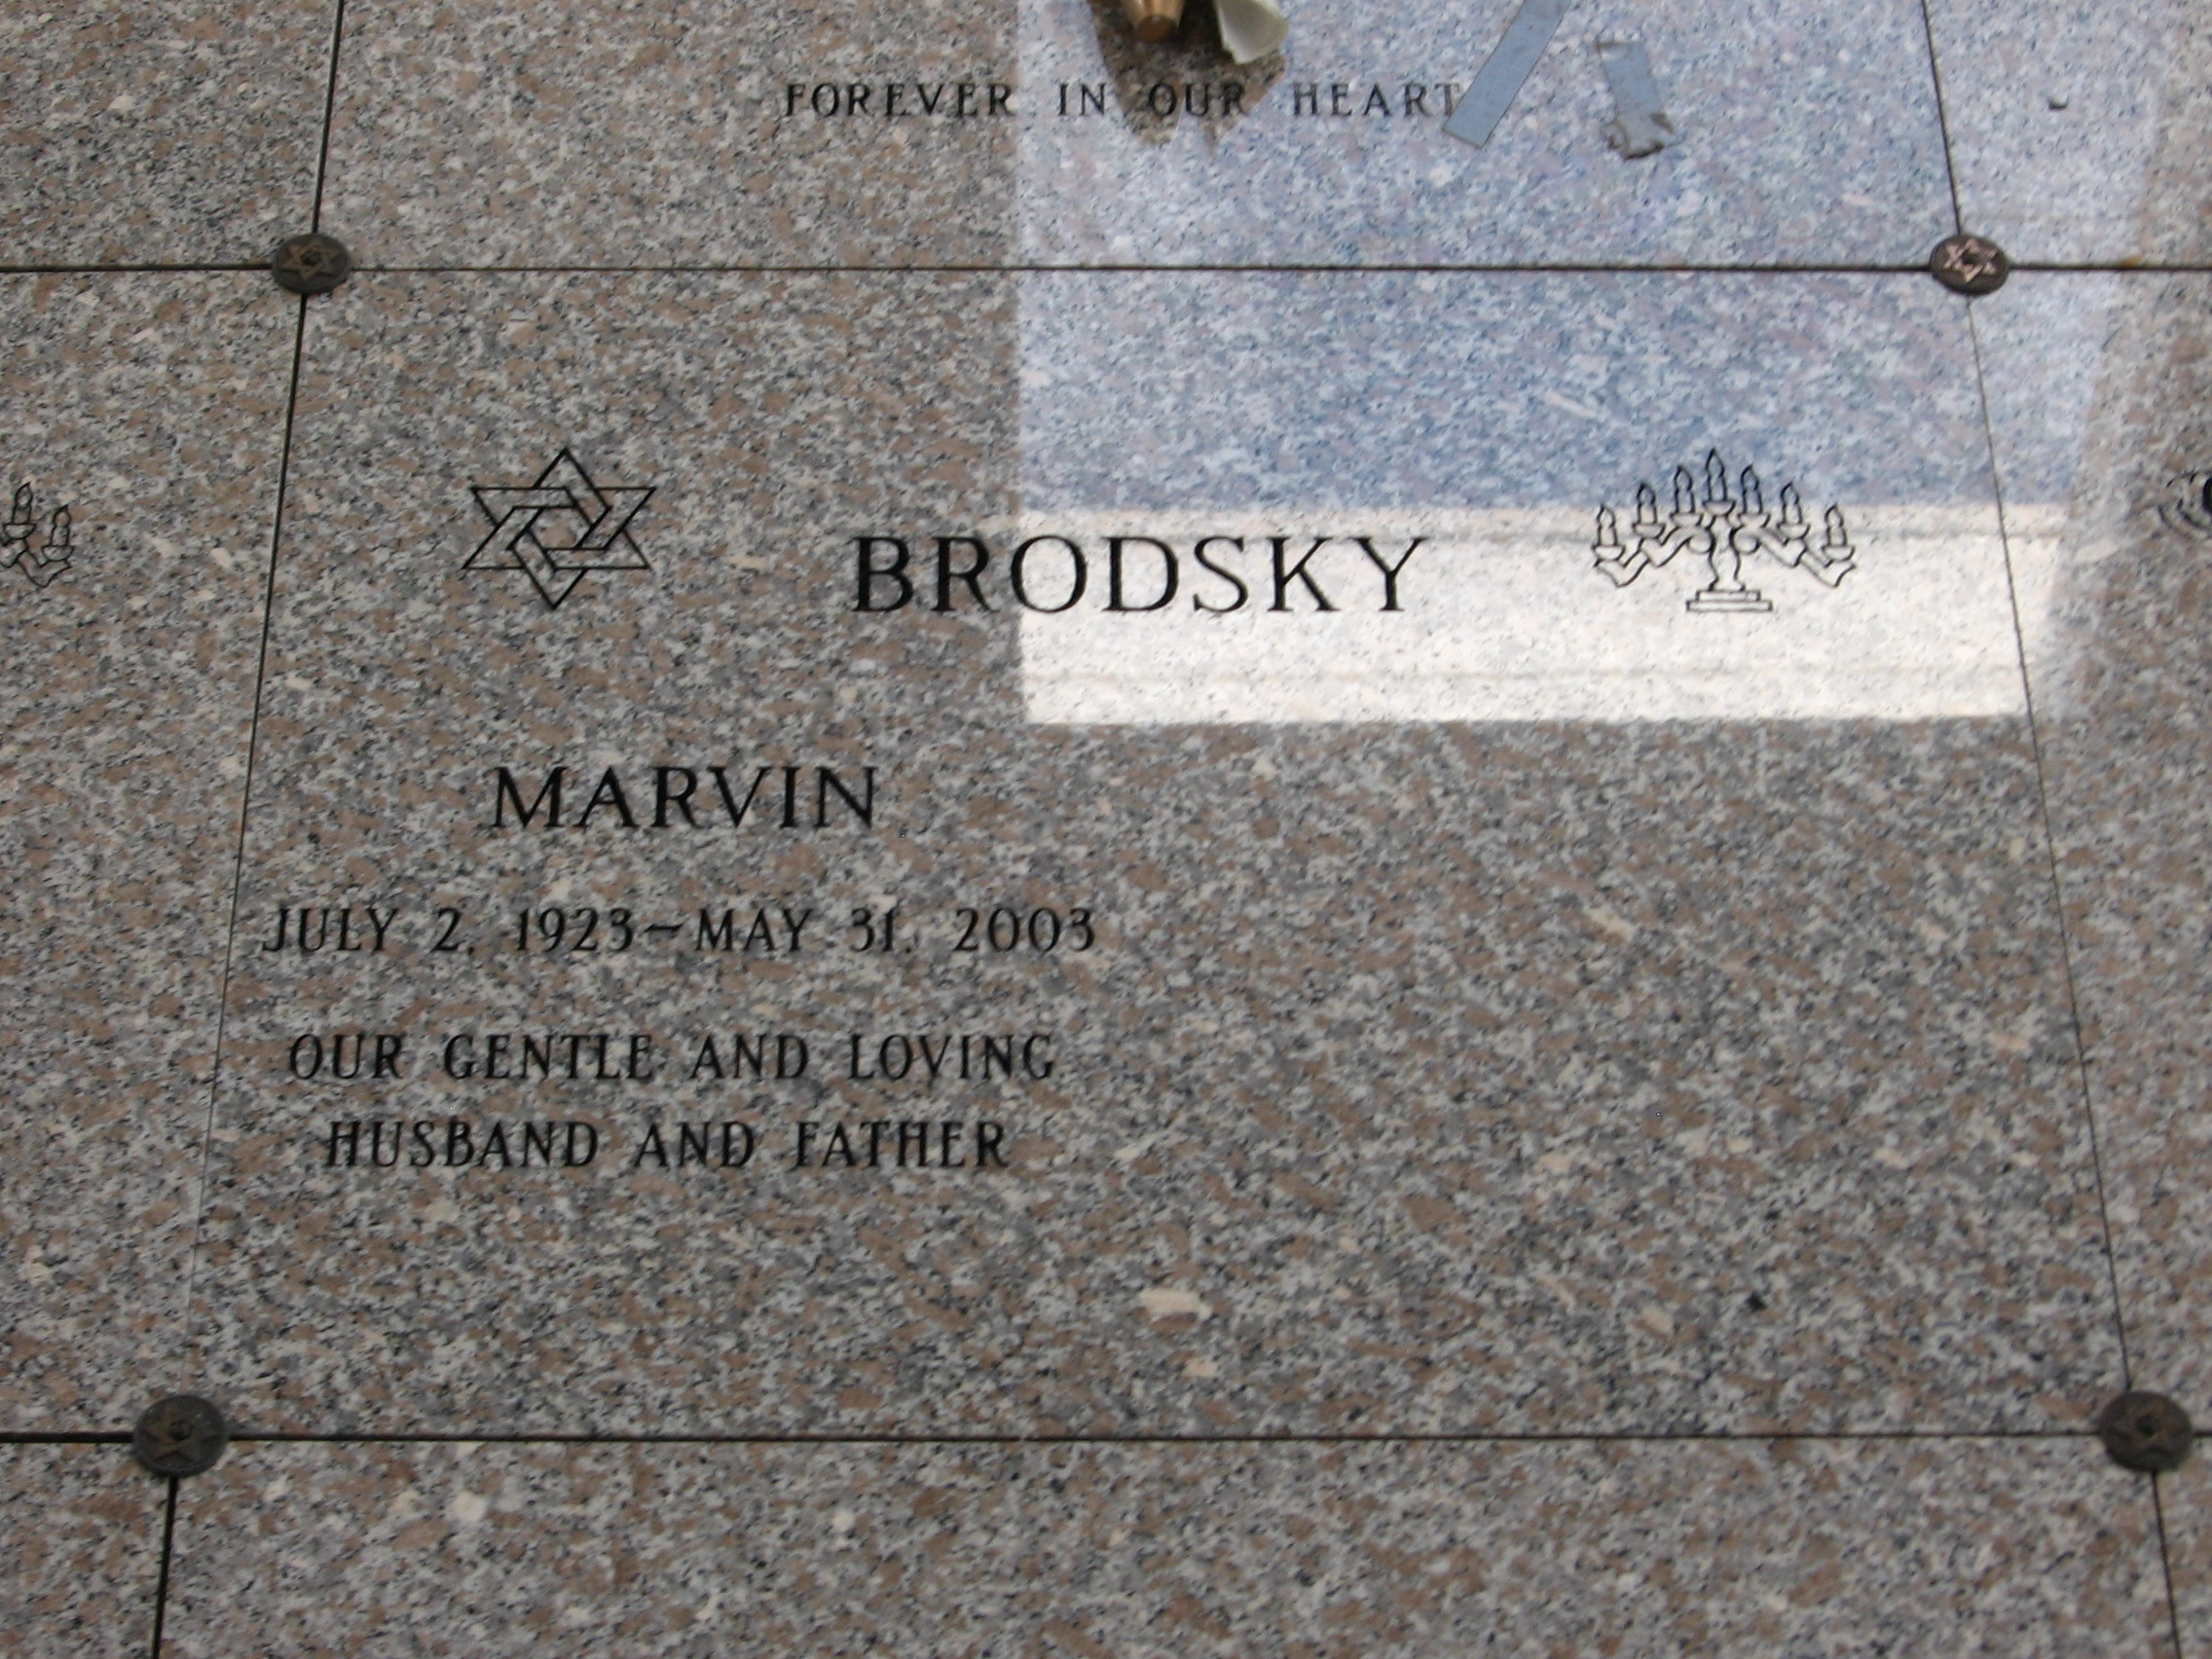 Marvin Brodsky